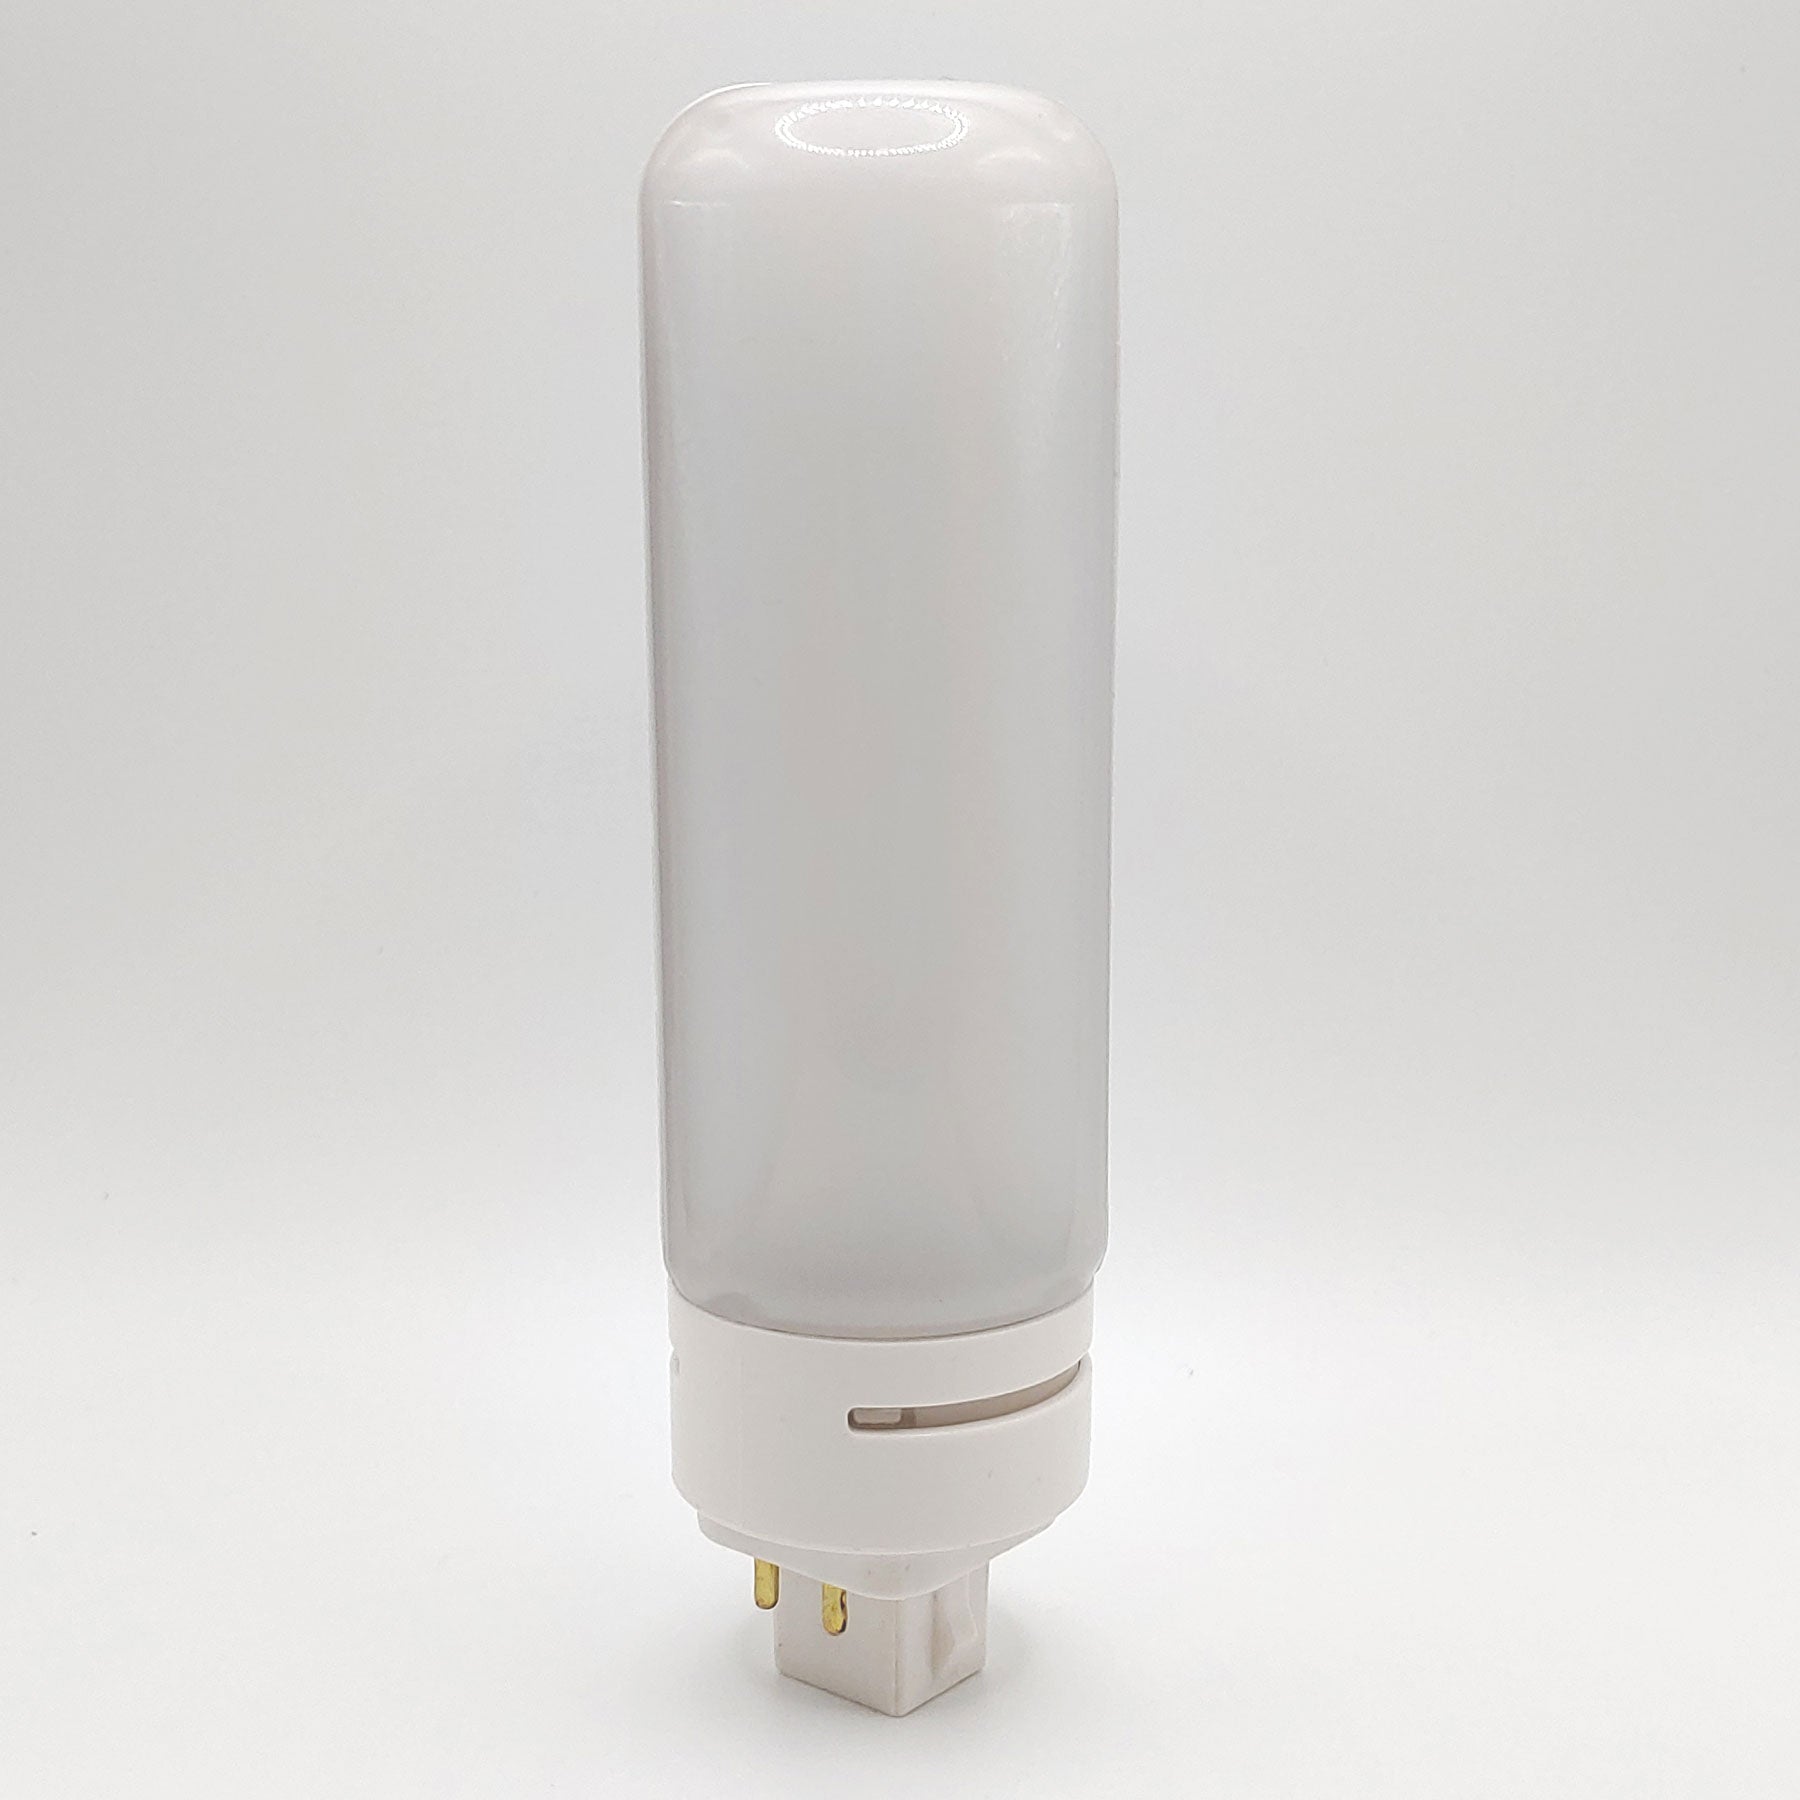 8.5-Watt G24Q (4-Pin) CFL Replacement LED Light Bulb Horizontal Applications Only